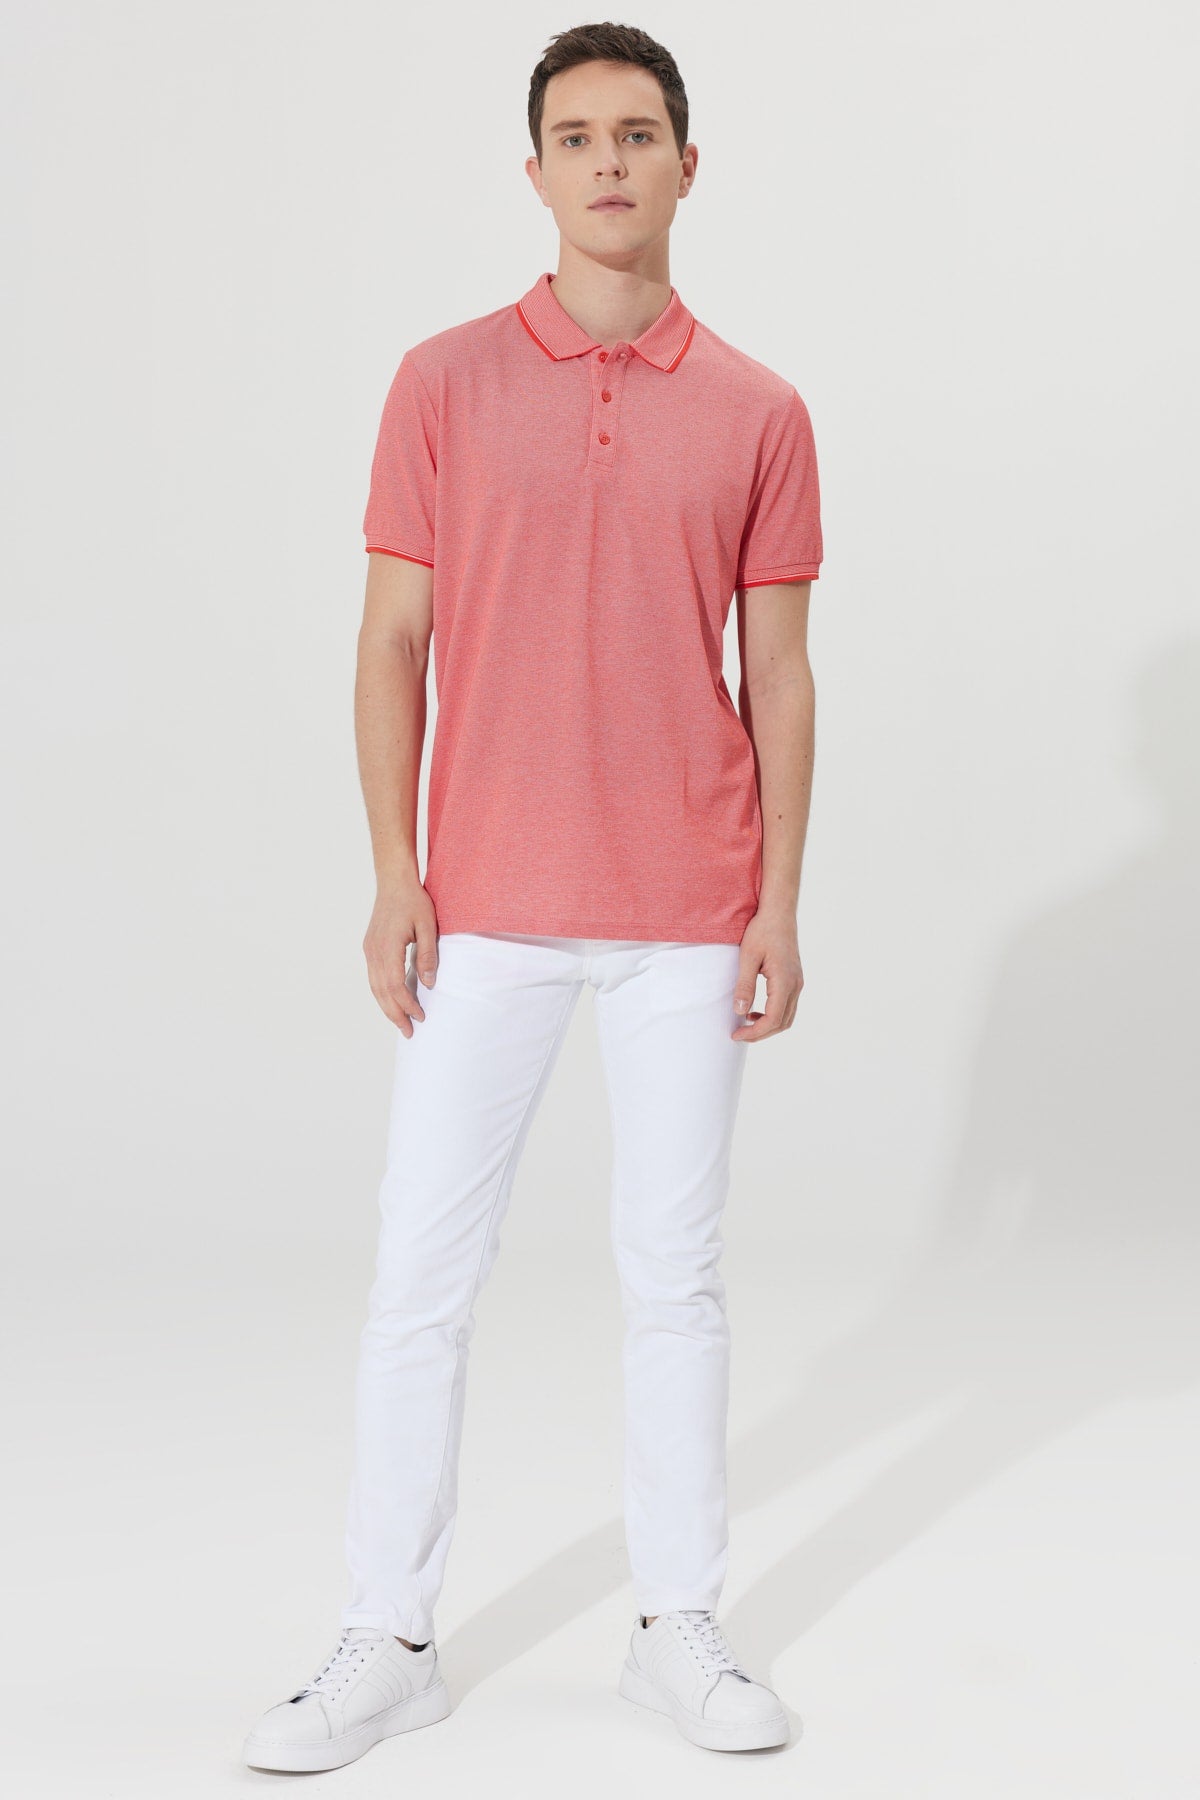 Men's Non-Shrink Cotton Fabric Slim Fit Narrow Cut Sunflower-White Anti-roll Polo Neck T-Shirt